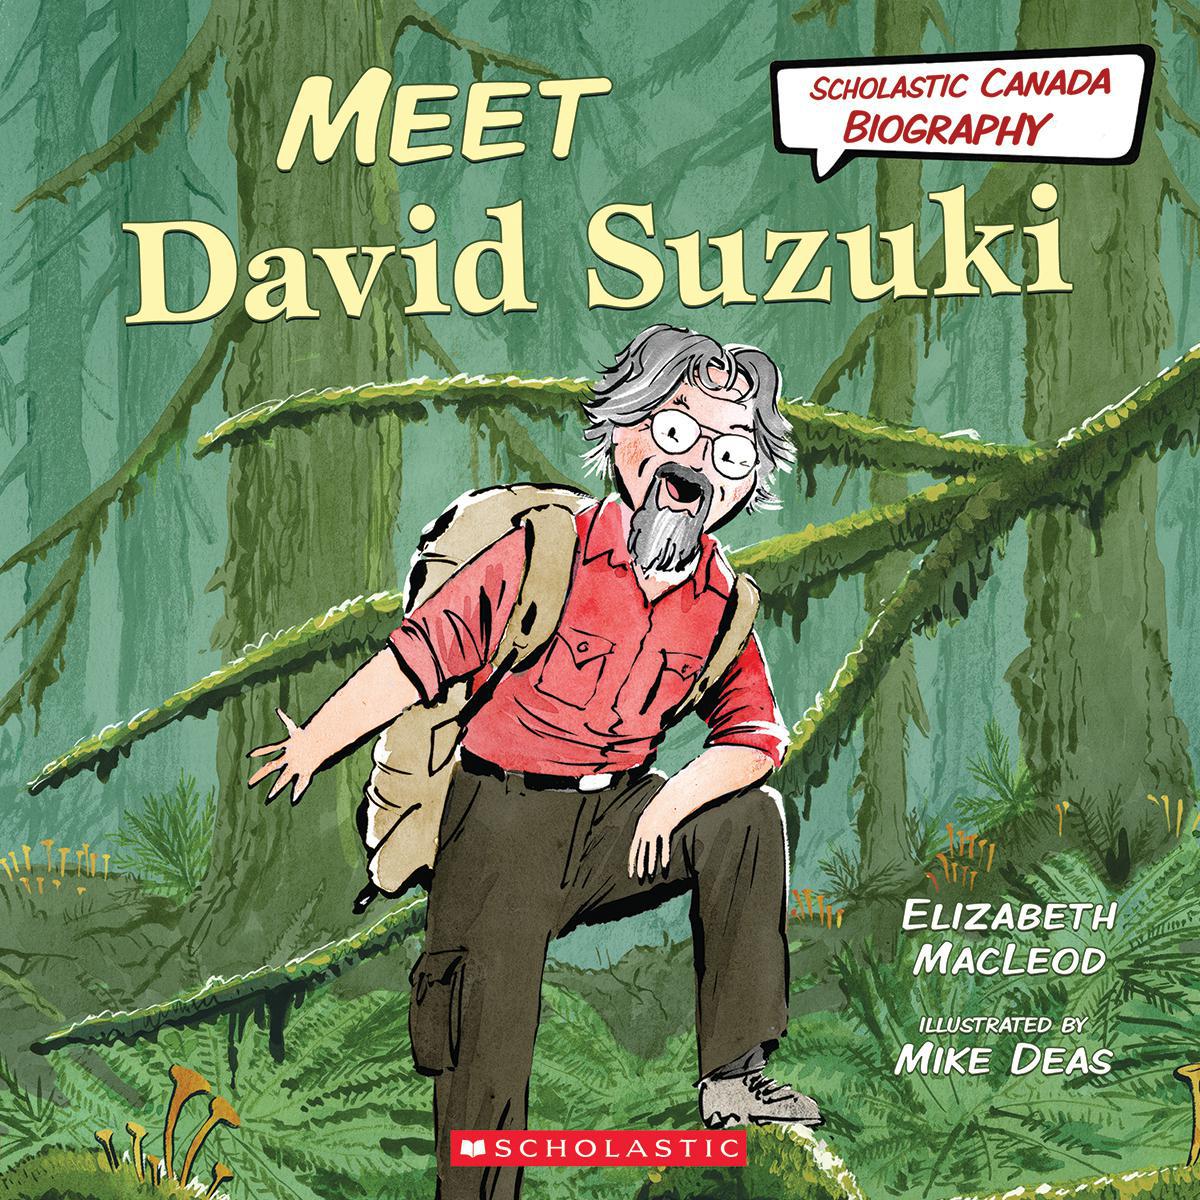  Scholastic Canada Biography: Meet David Suzuki 